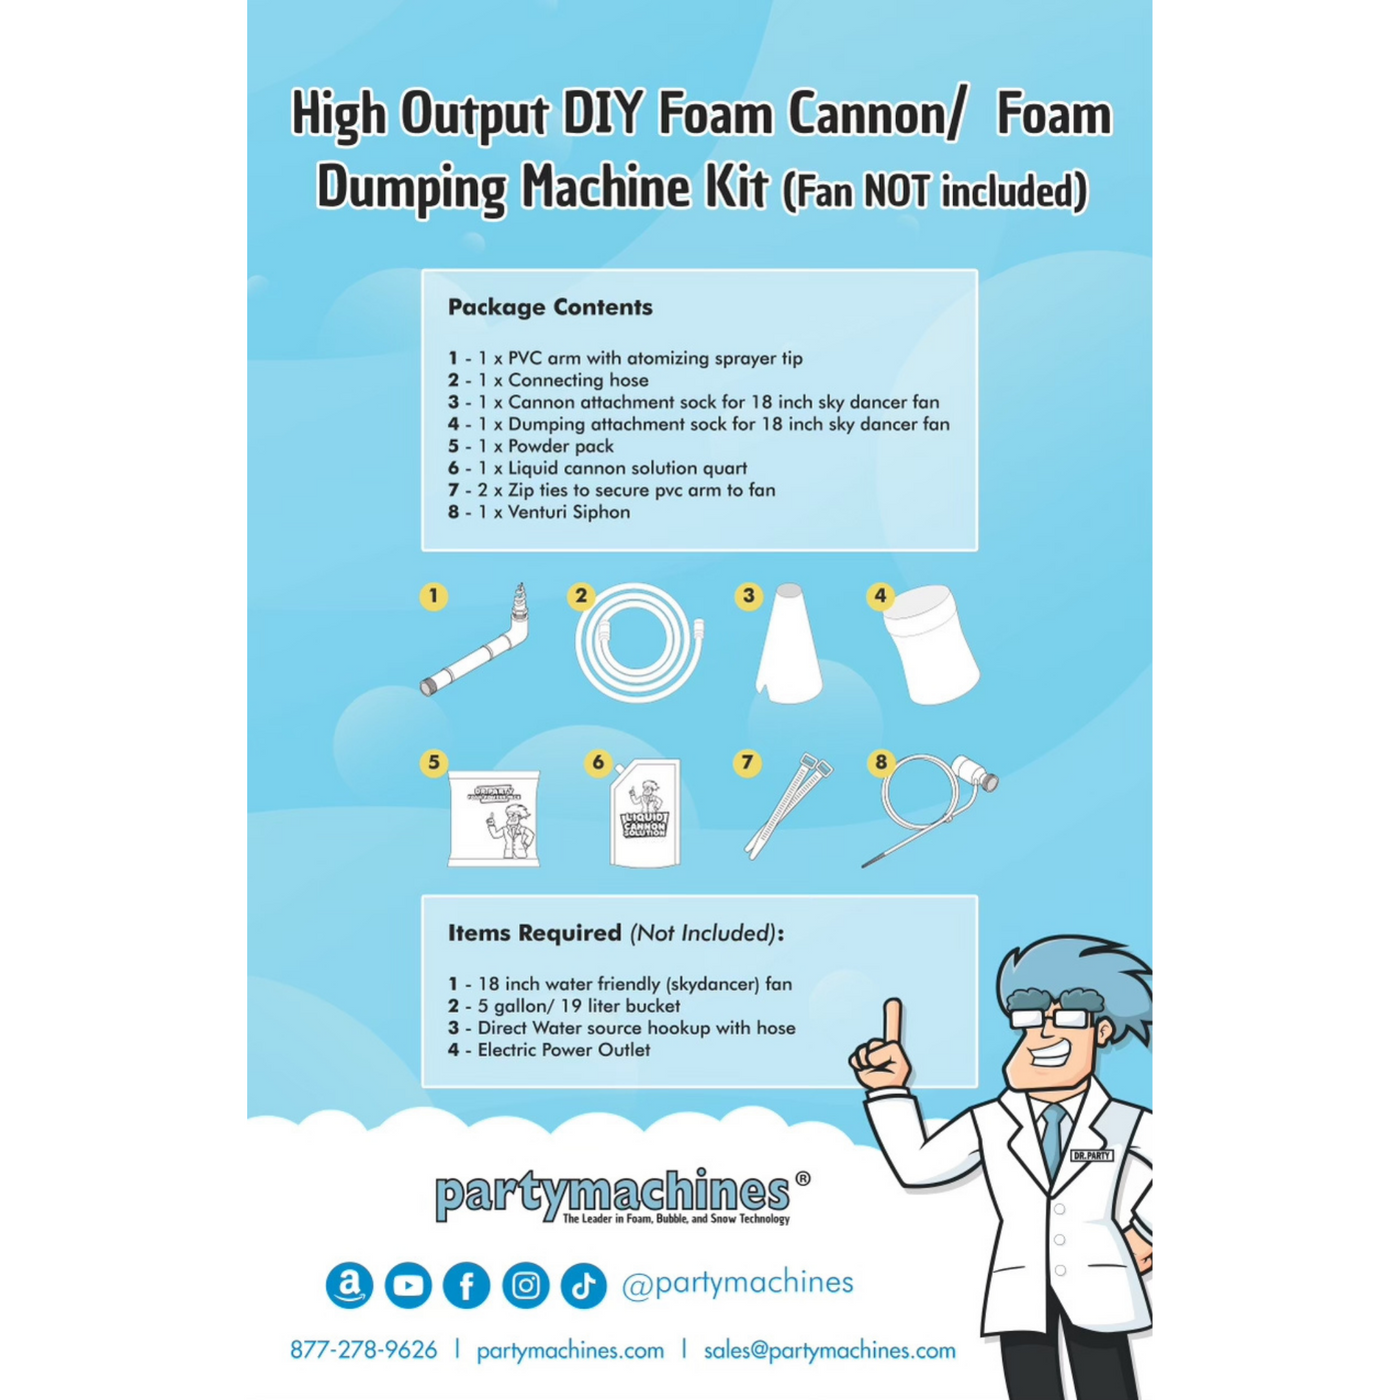 High Output DIY Foam Machine Kit Instructions